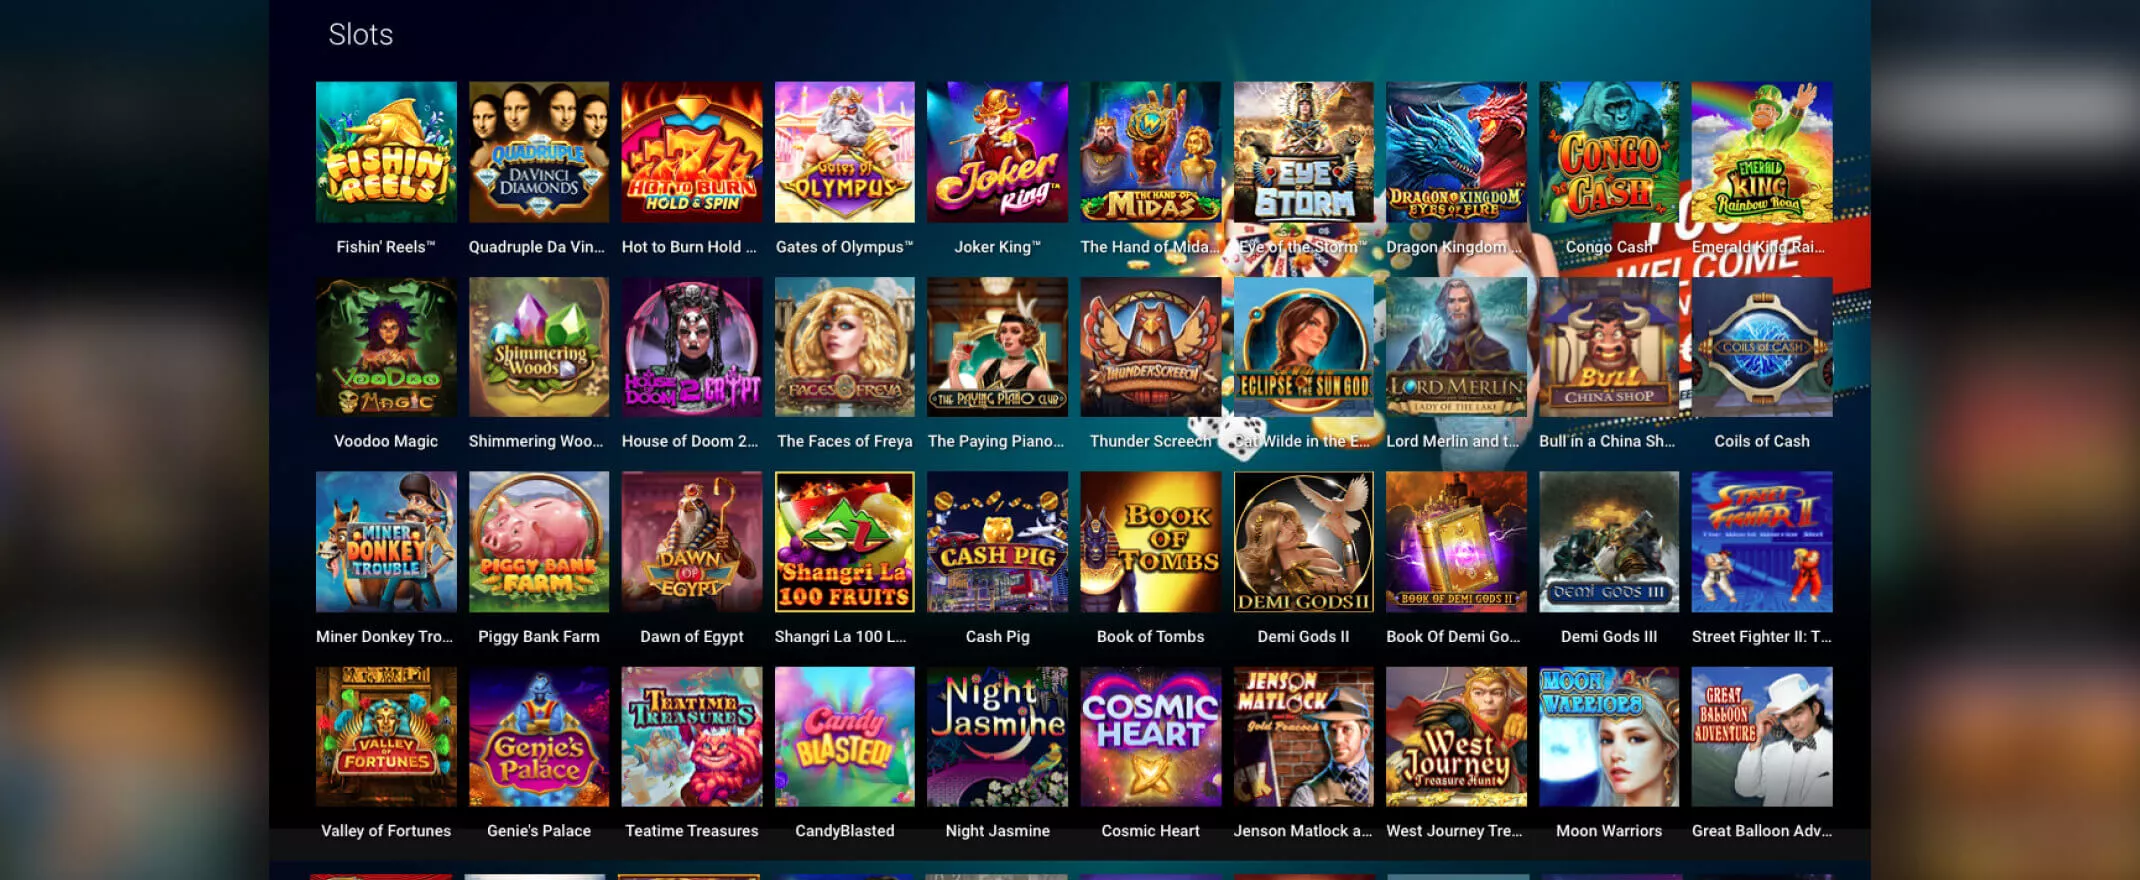 Shangri La casino screenshot of the games